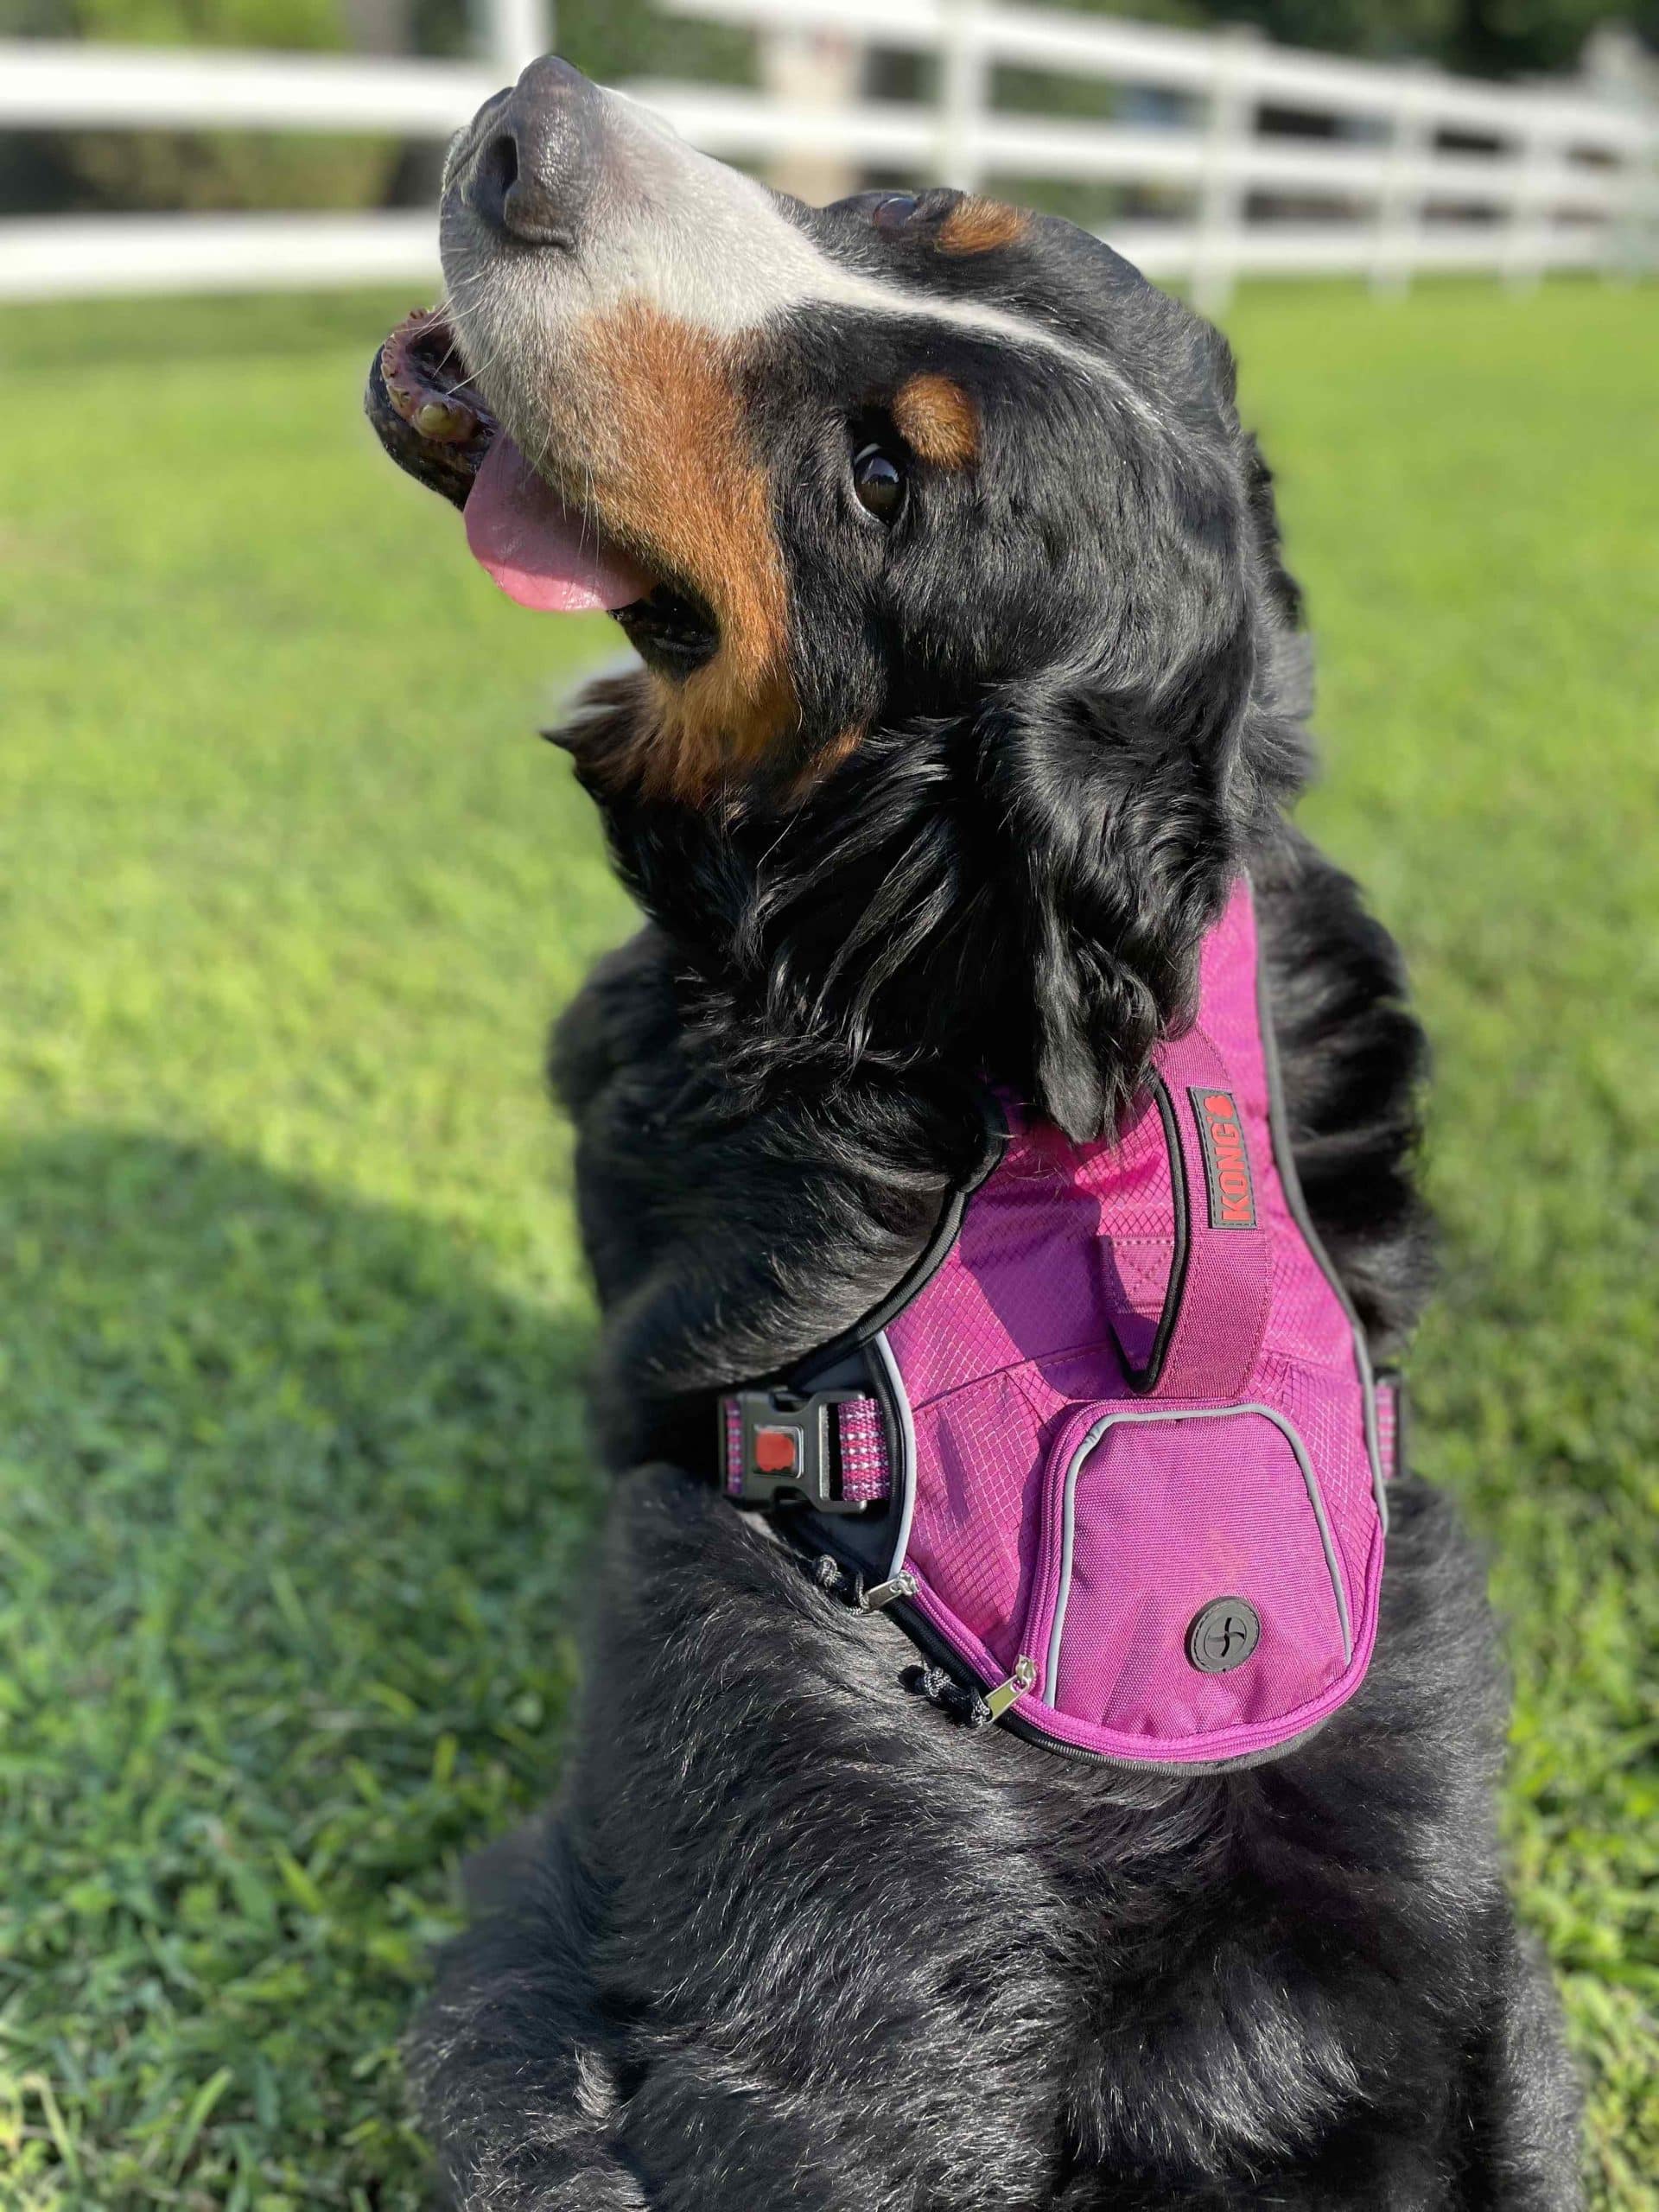 Ruby, wearing a Kong harness